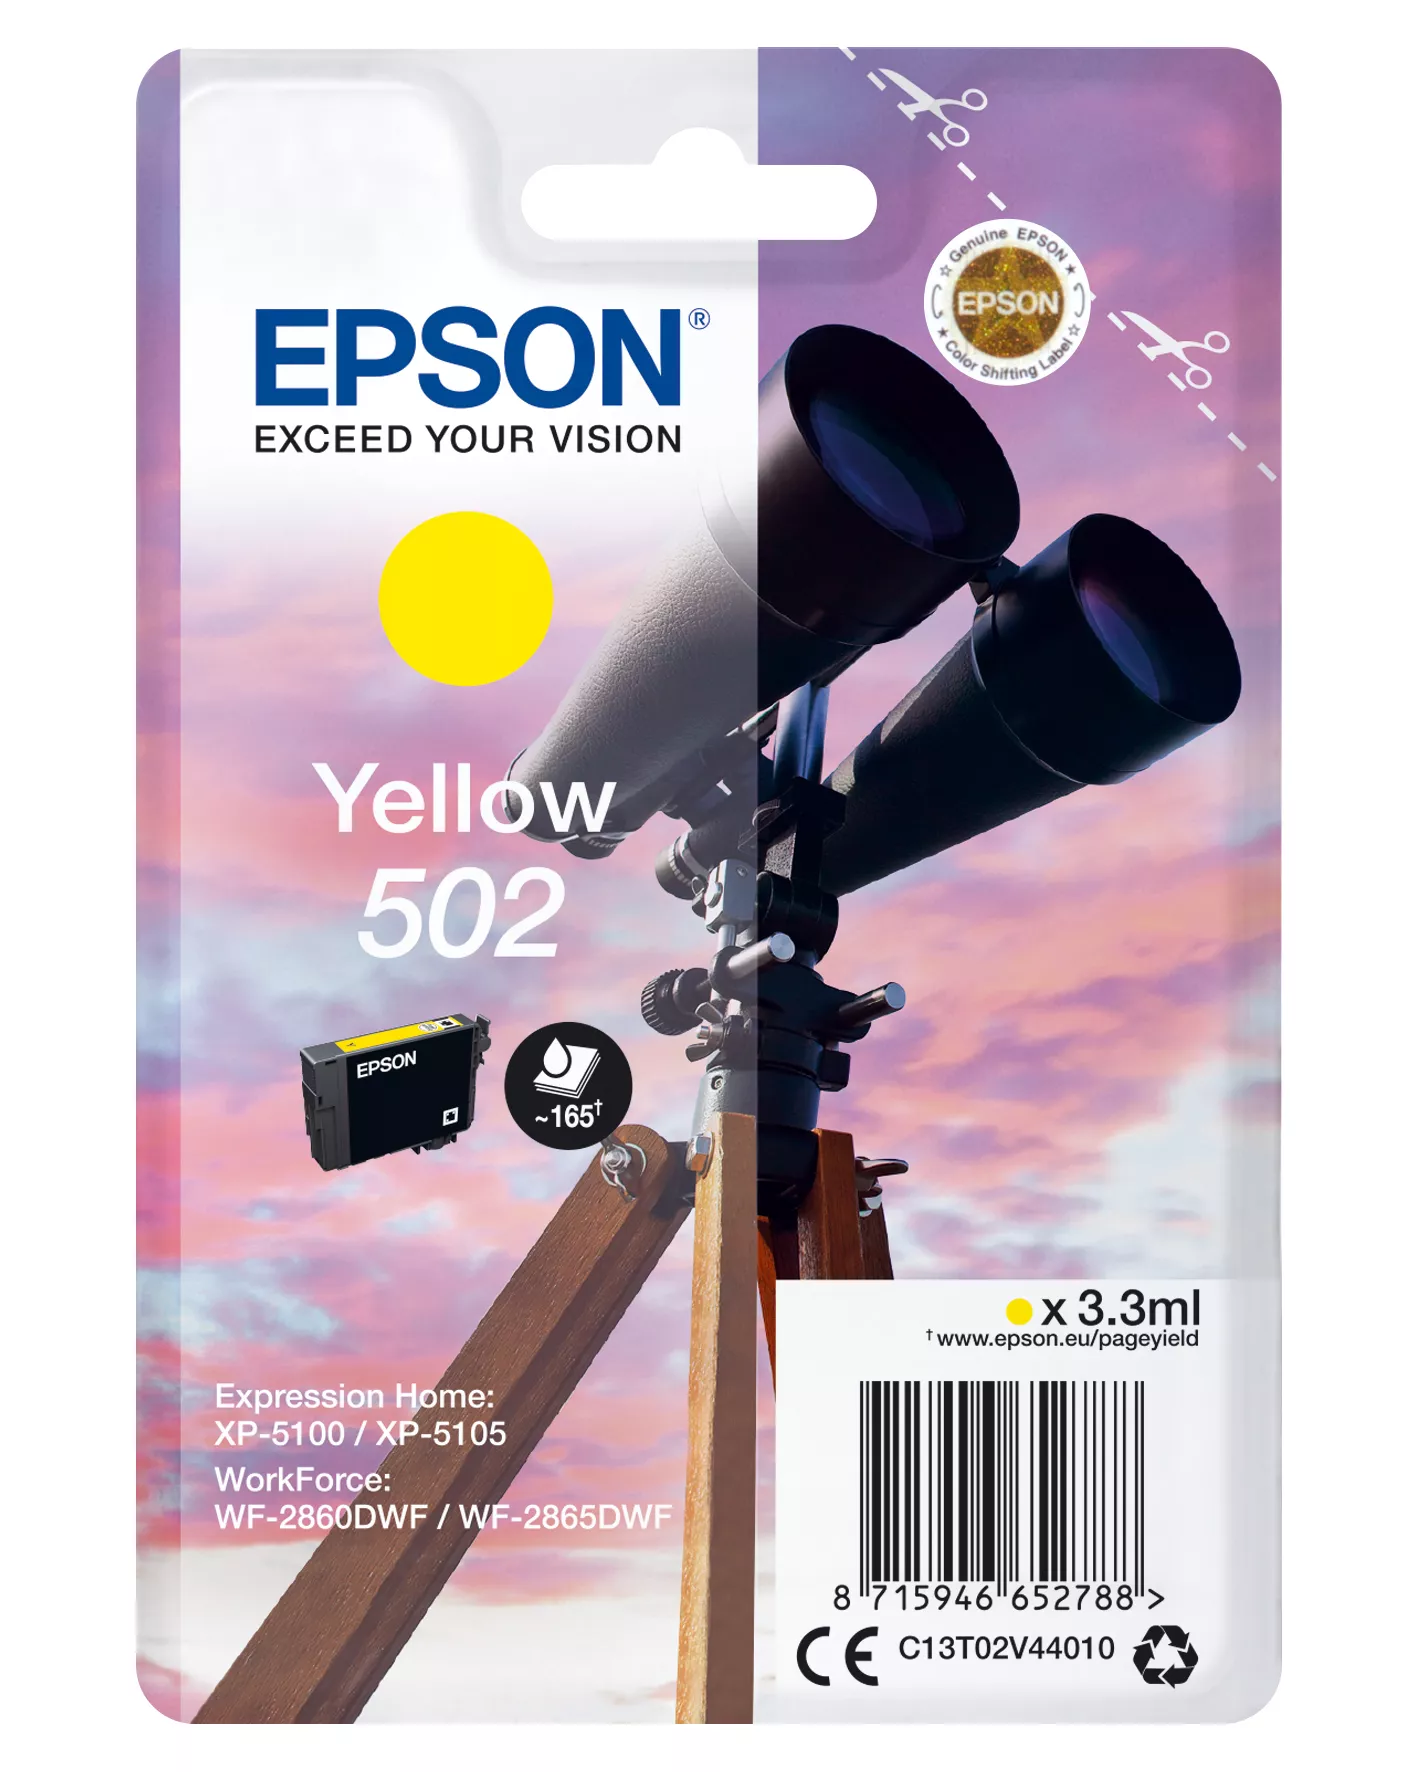 Achat EPSON Singlepack Yellow 502 Ink au meilleur prix